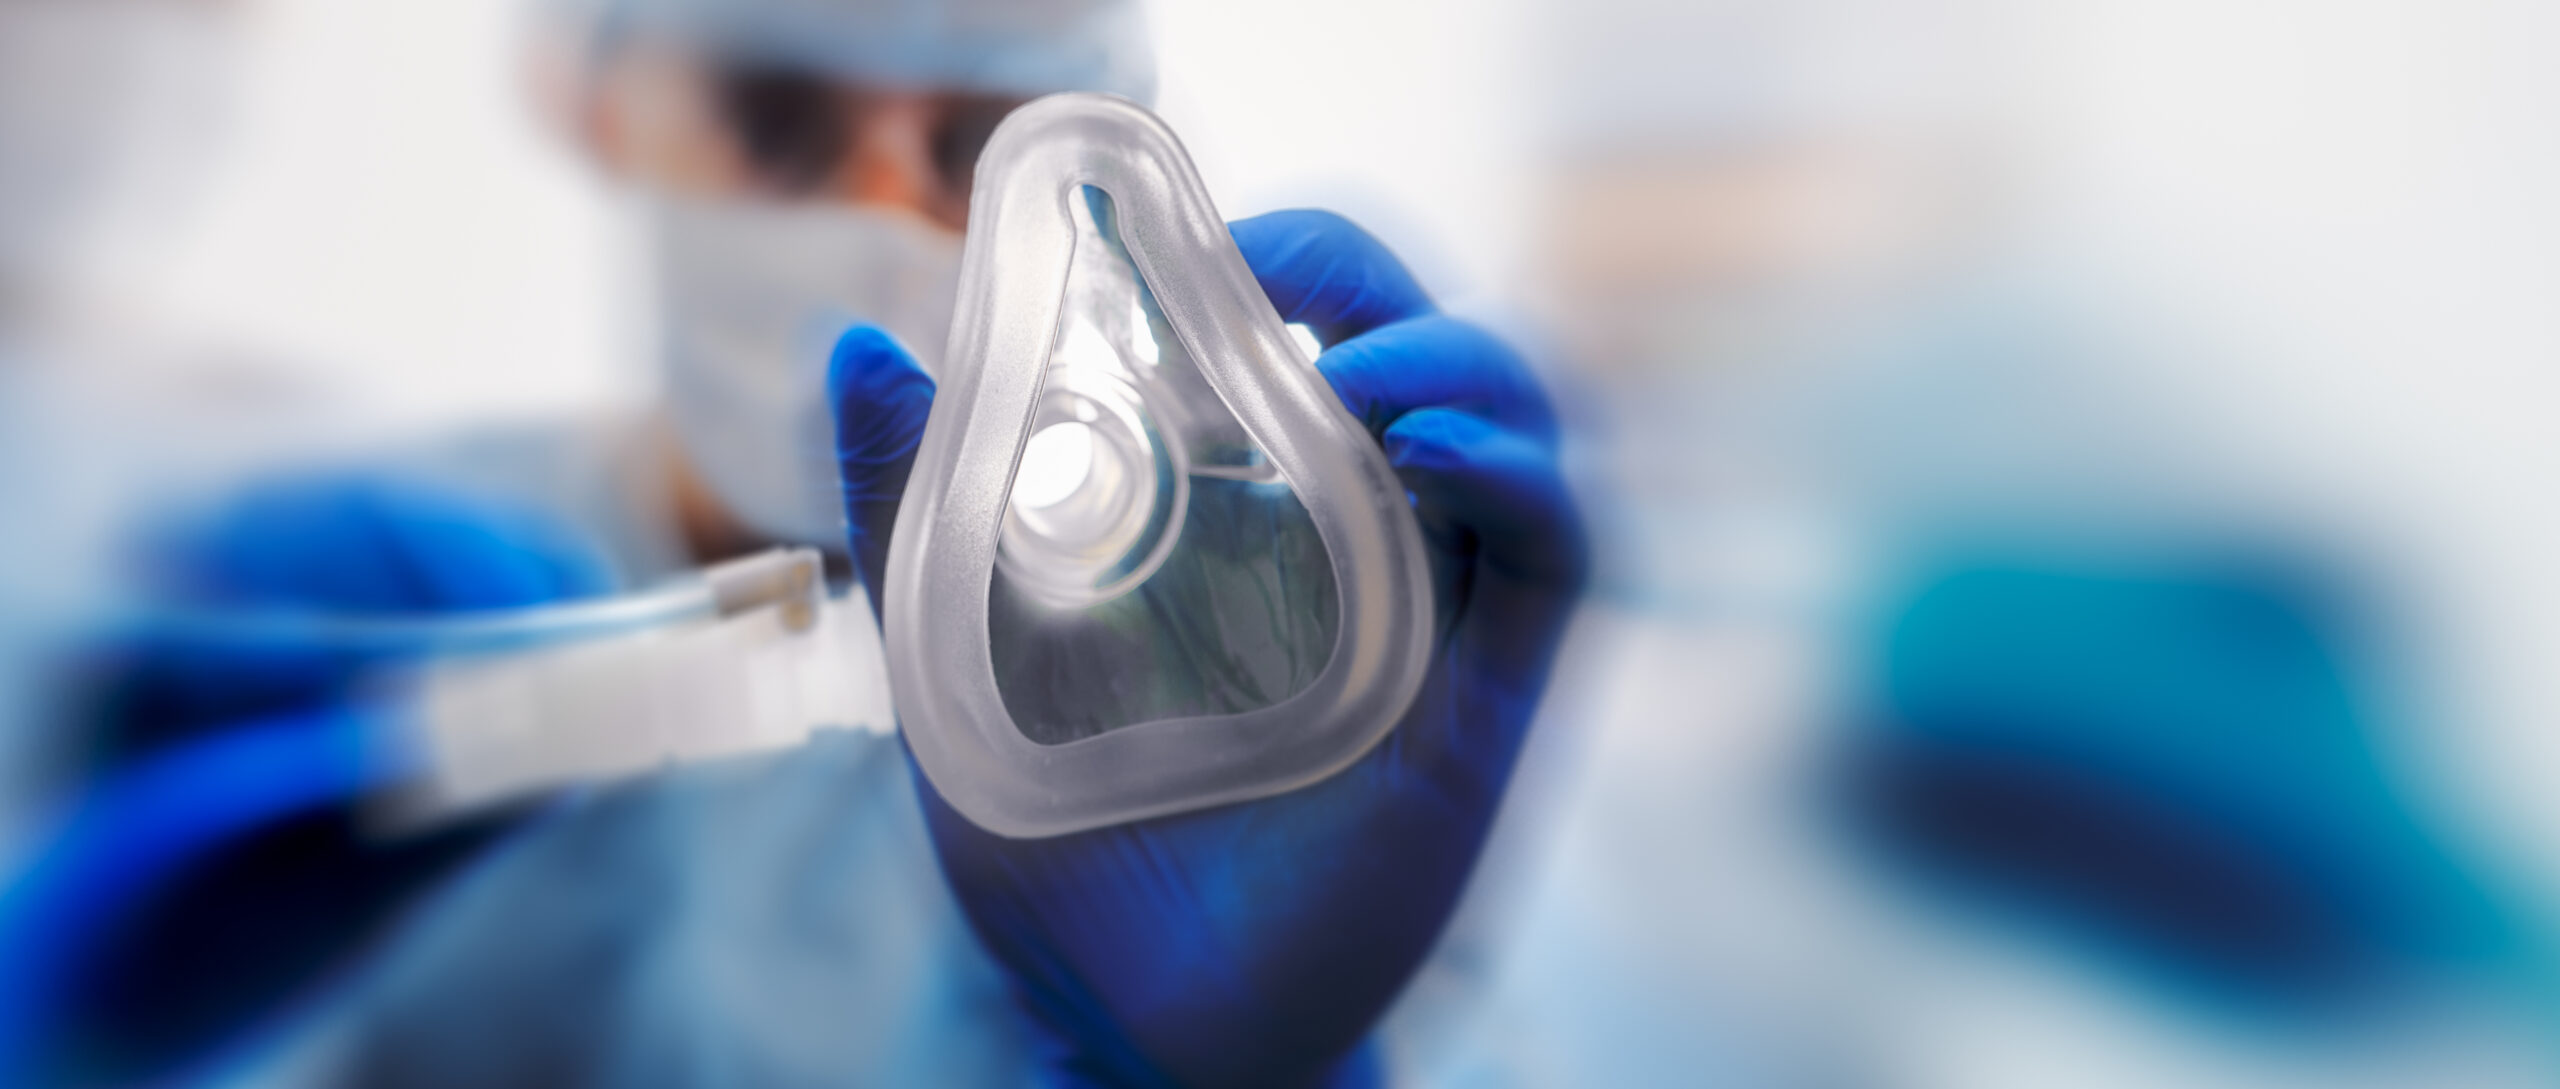 Understanding the Basics: IV Sedation vs General Anesthesia